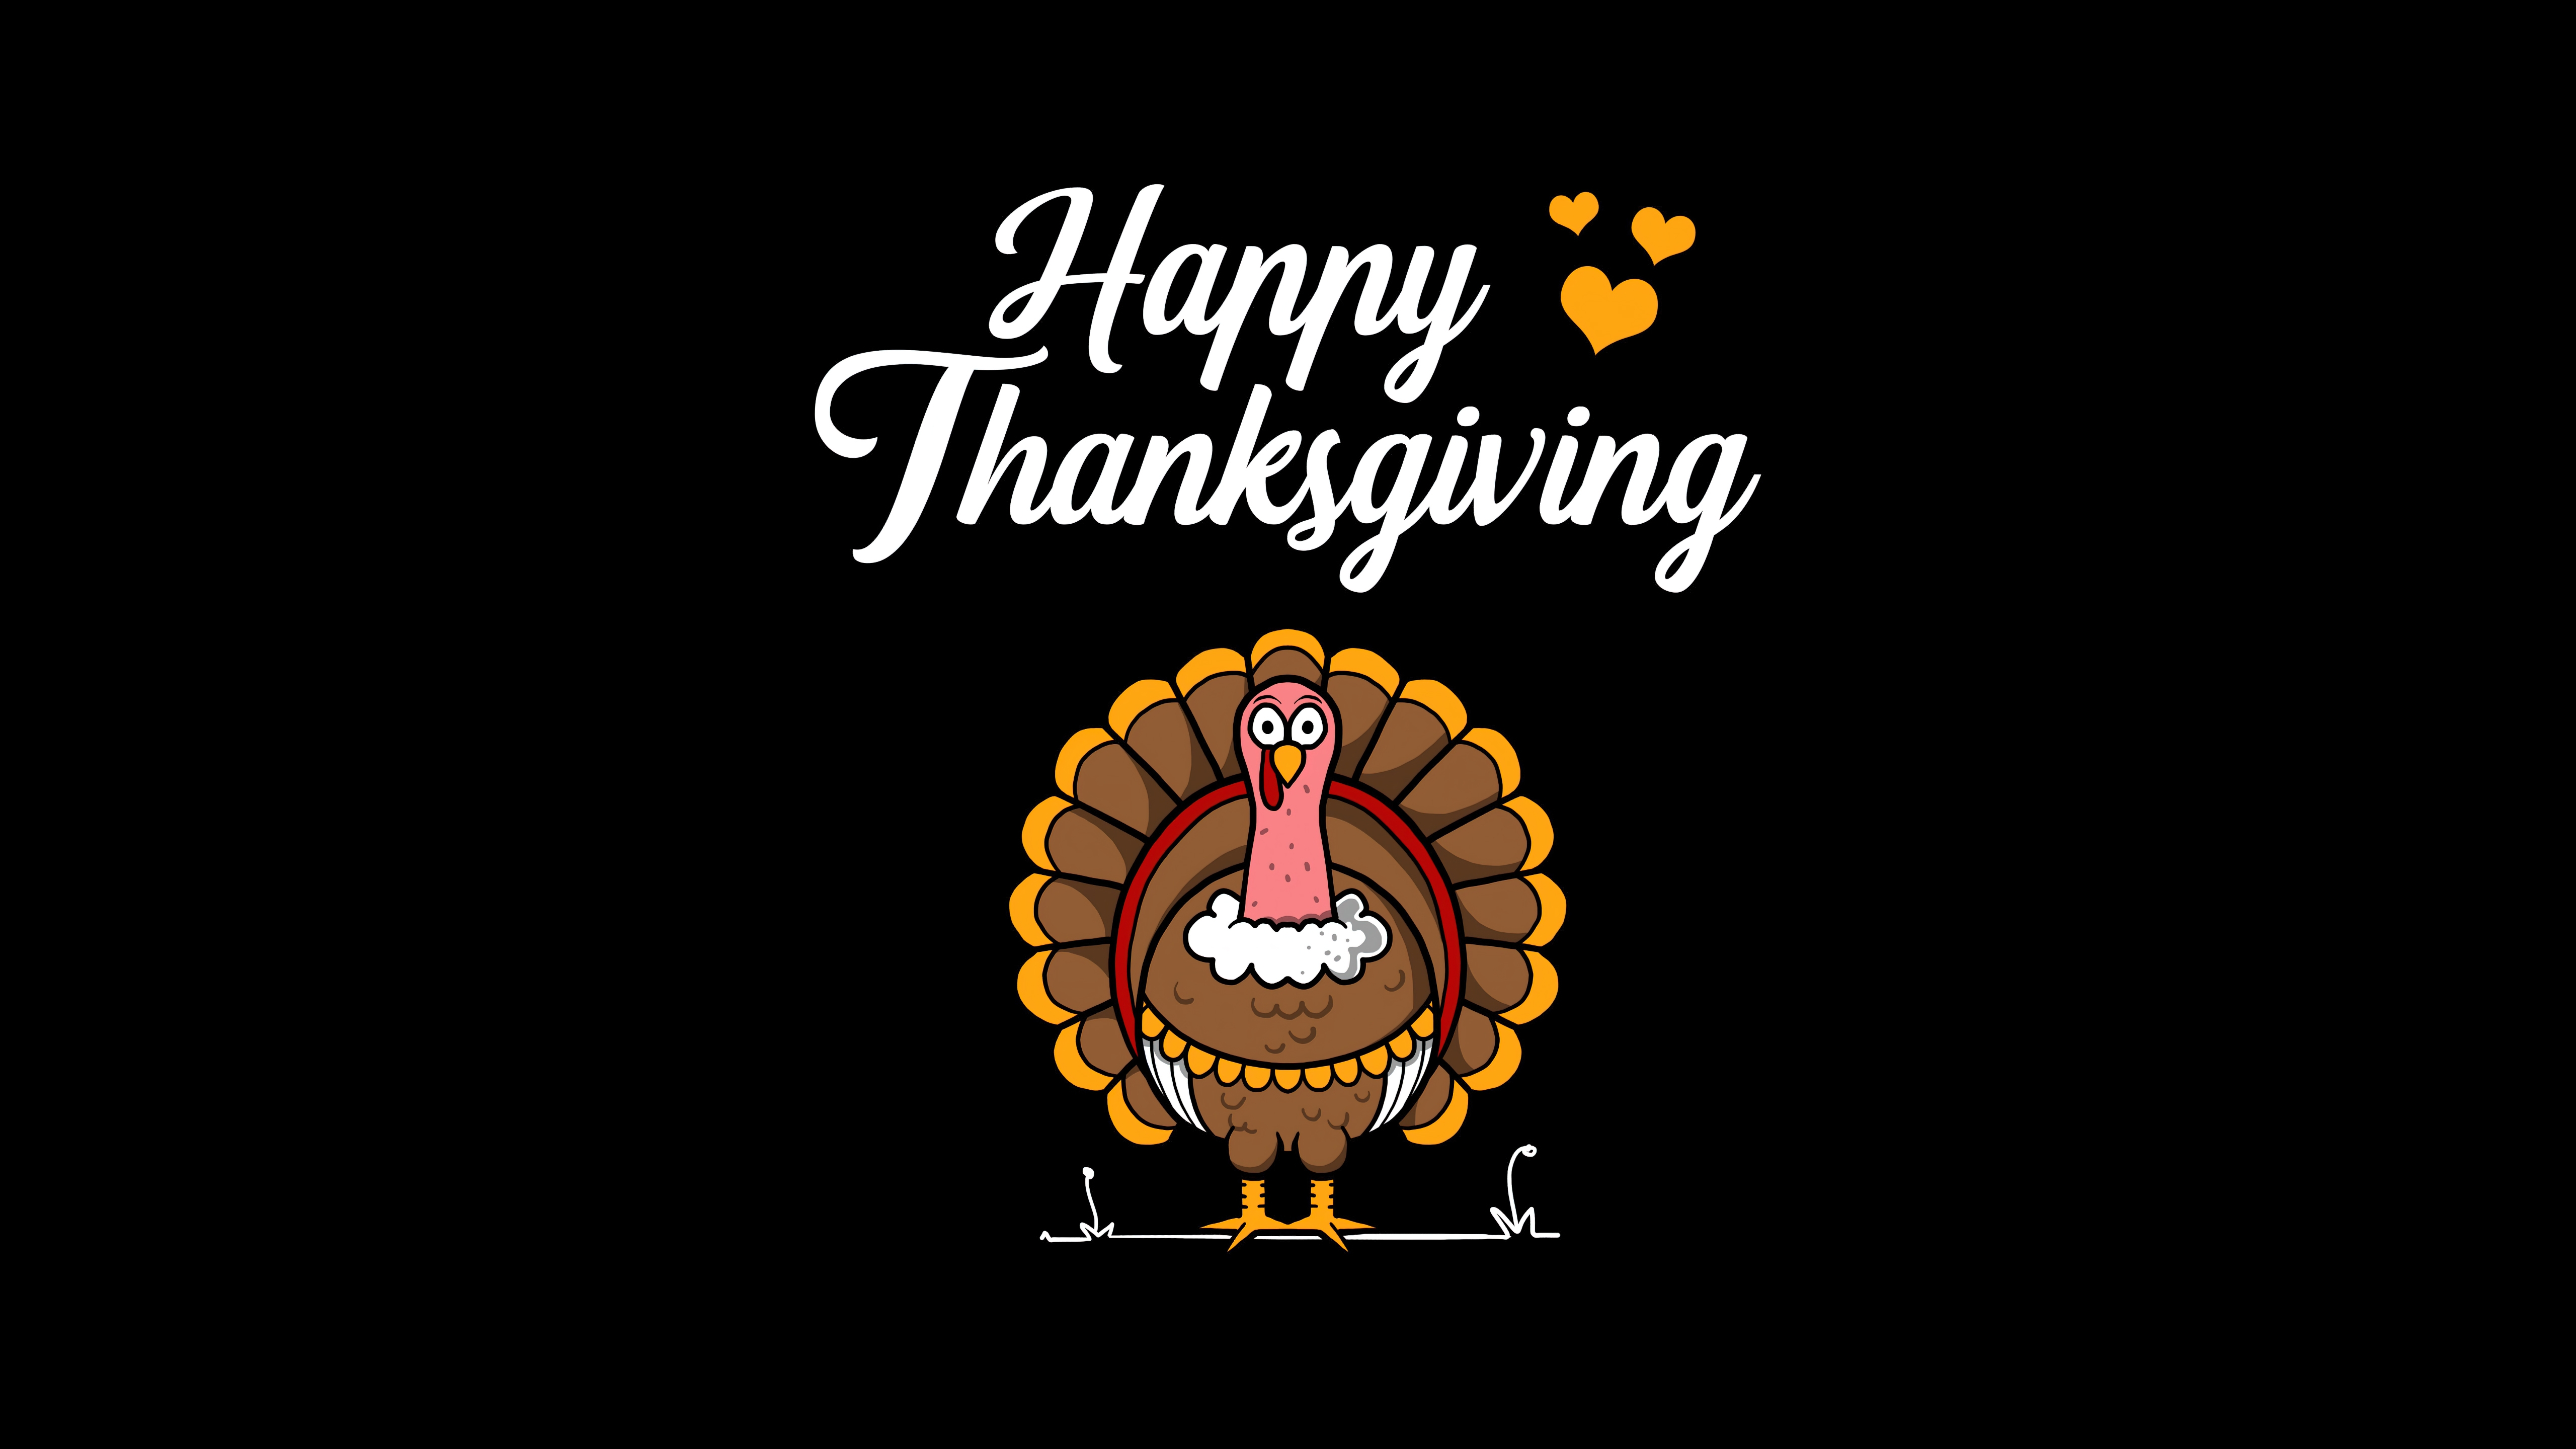 HD wallpaper, Happy Thanksgiving, Black Background, Thanksgiving Day, 5K, Illustration